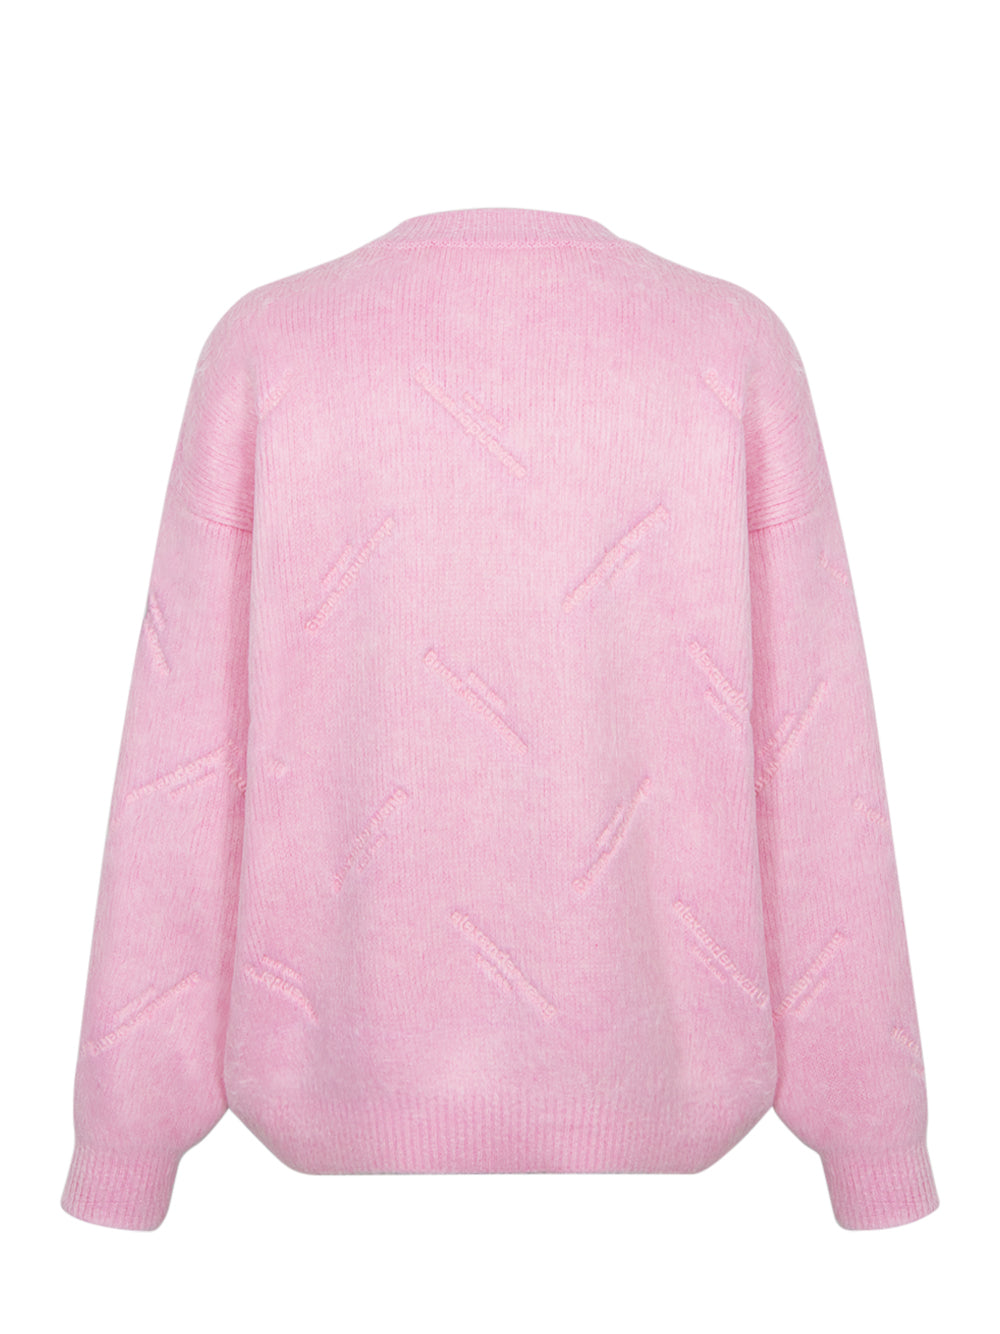 Alexander-Wang-Brushed-Crewneck-Pullover-with-Deboss-Logo-Prism-Pink-2